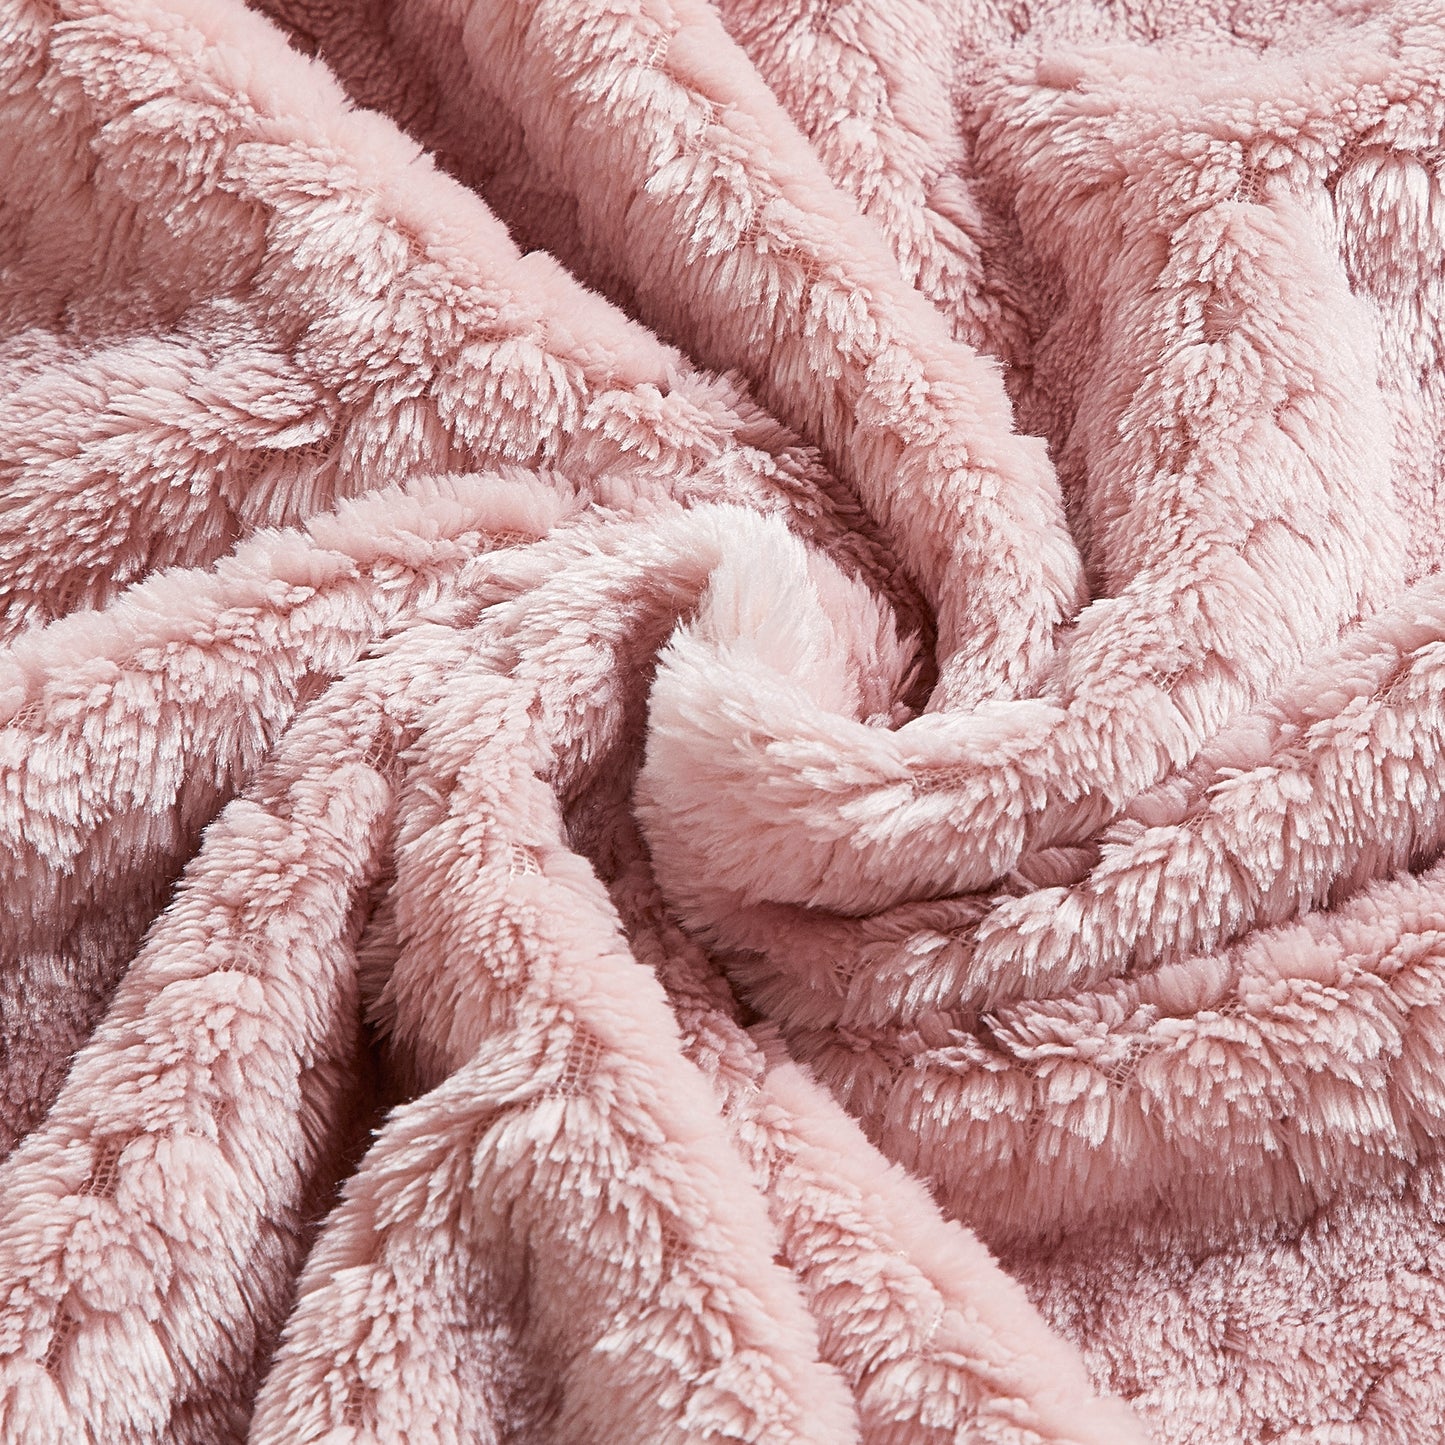 Classic Textured Fleece Blanket - Blush